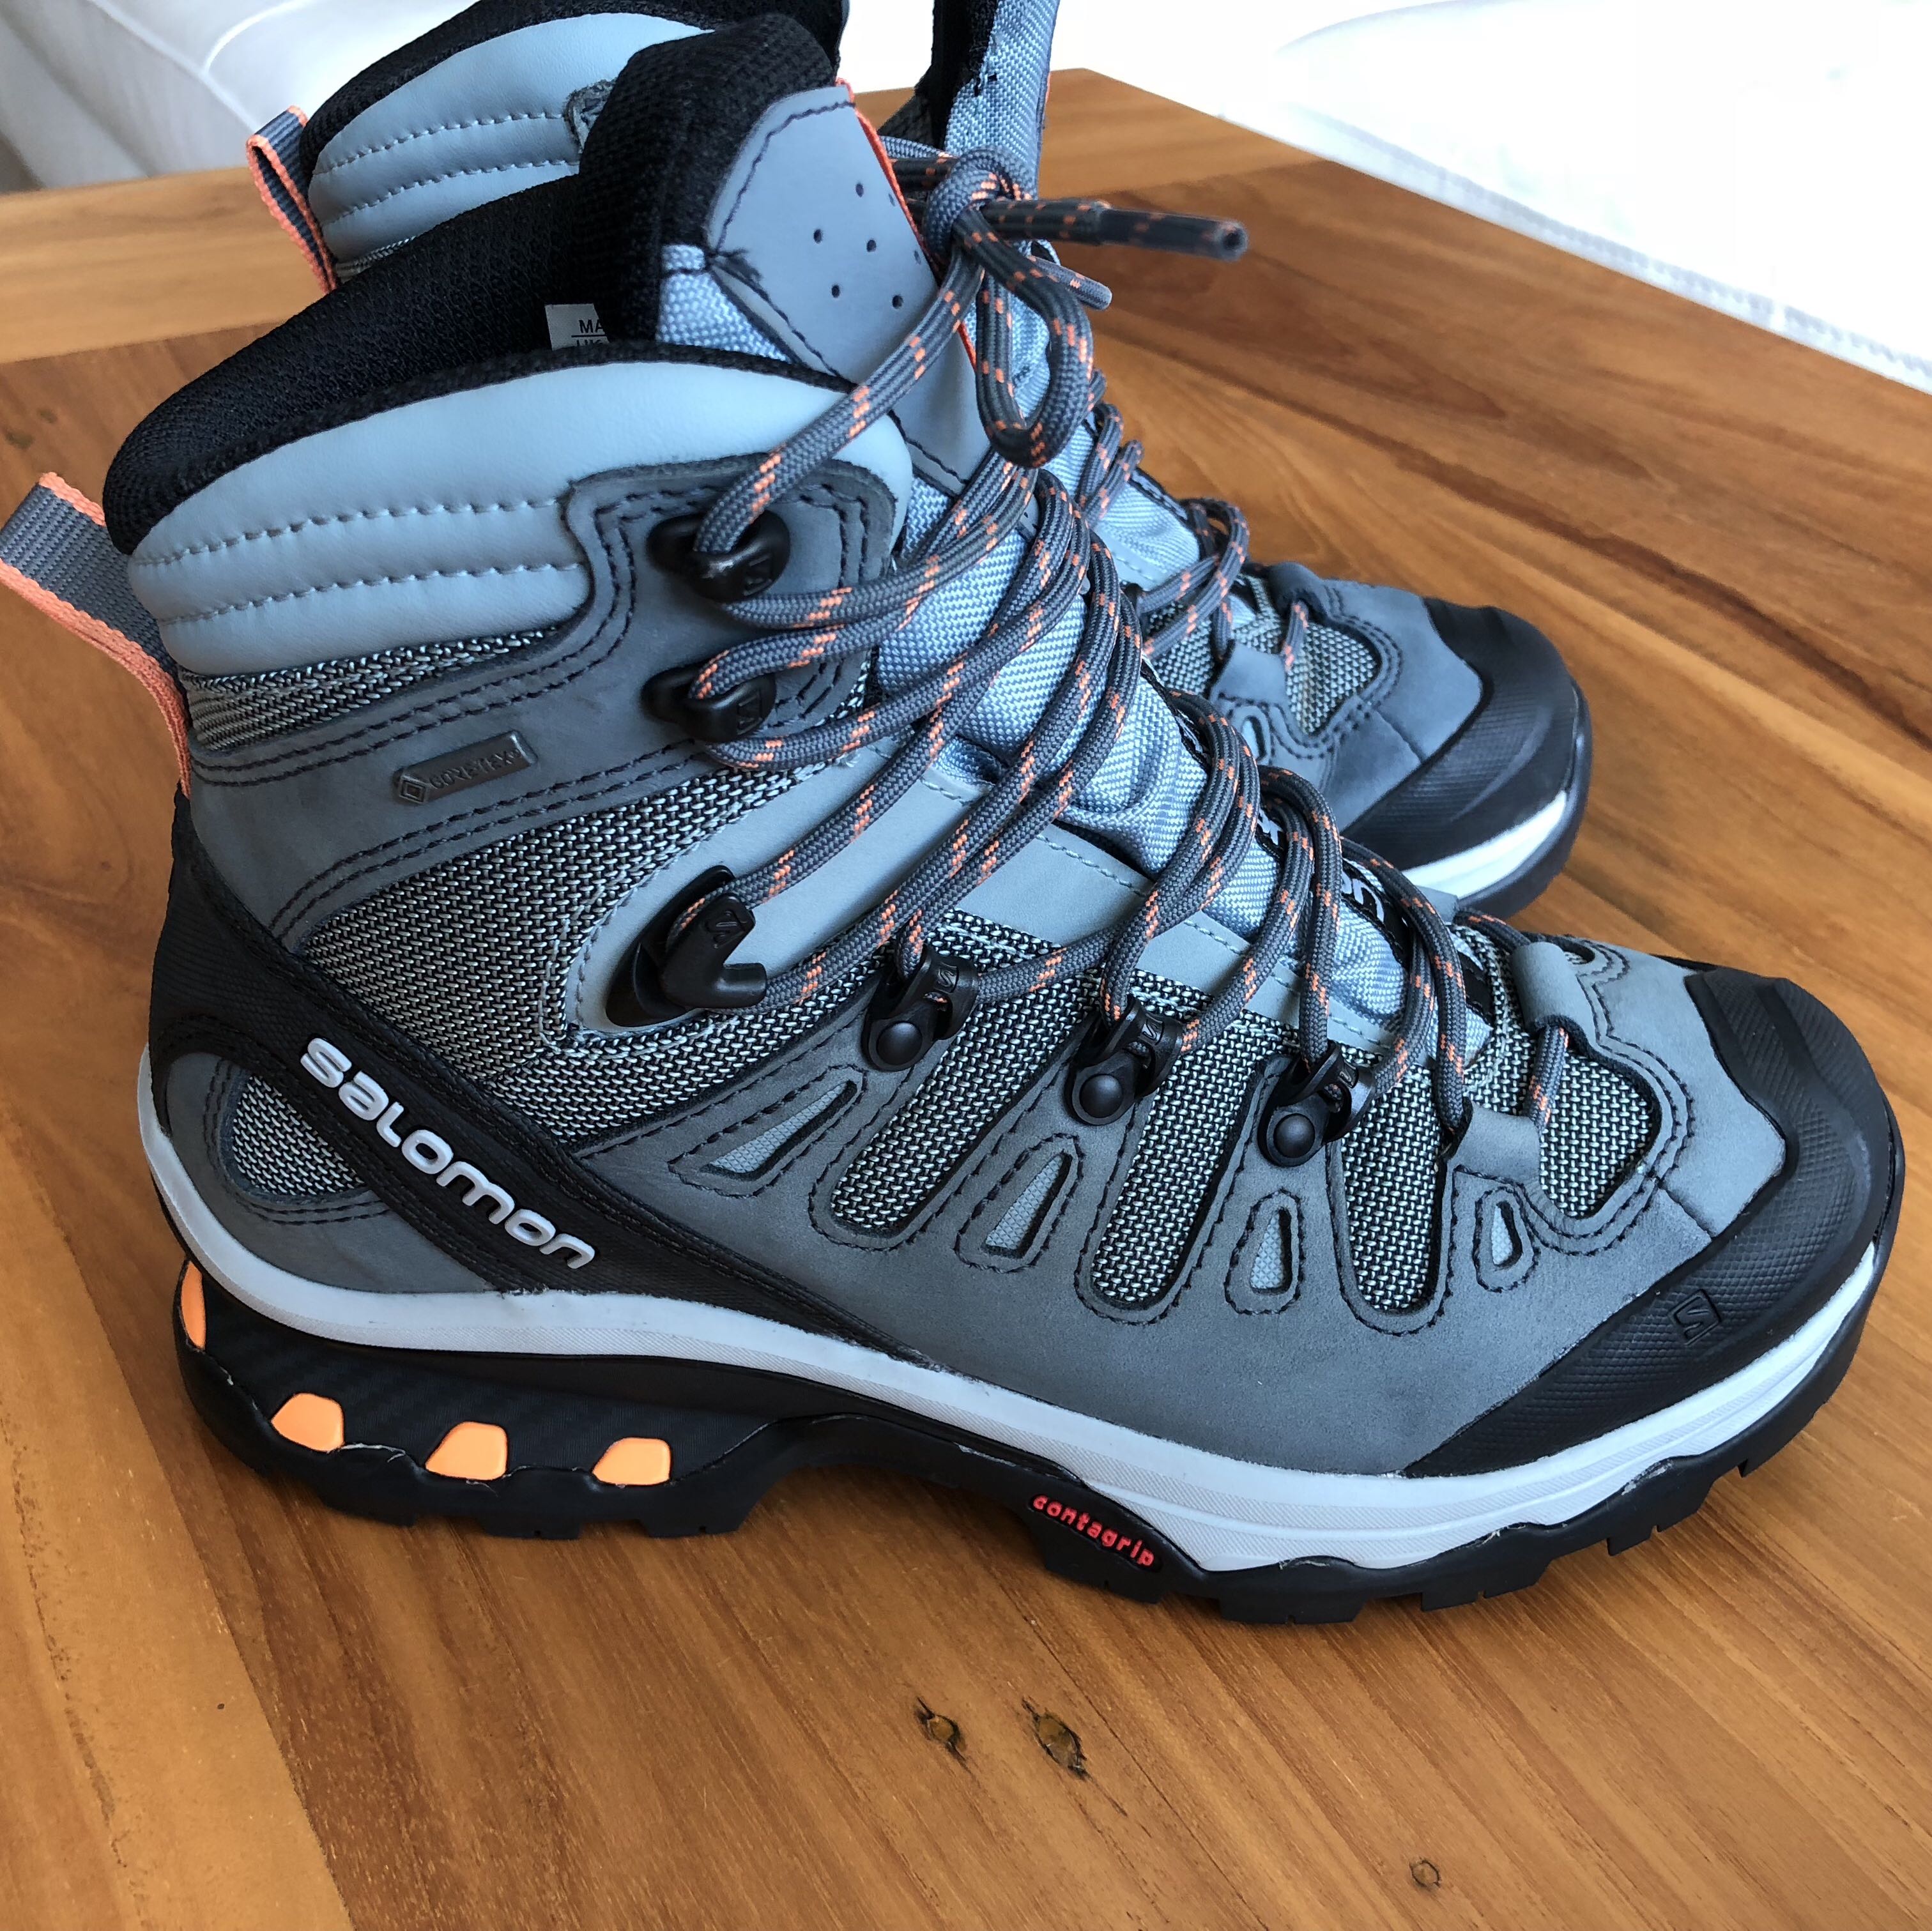 Salomon Quest 4D 3 GTX Hiking/Backpacking Boots - Women's, Sports ...